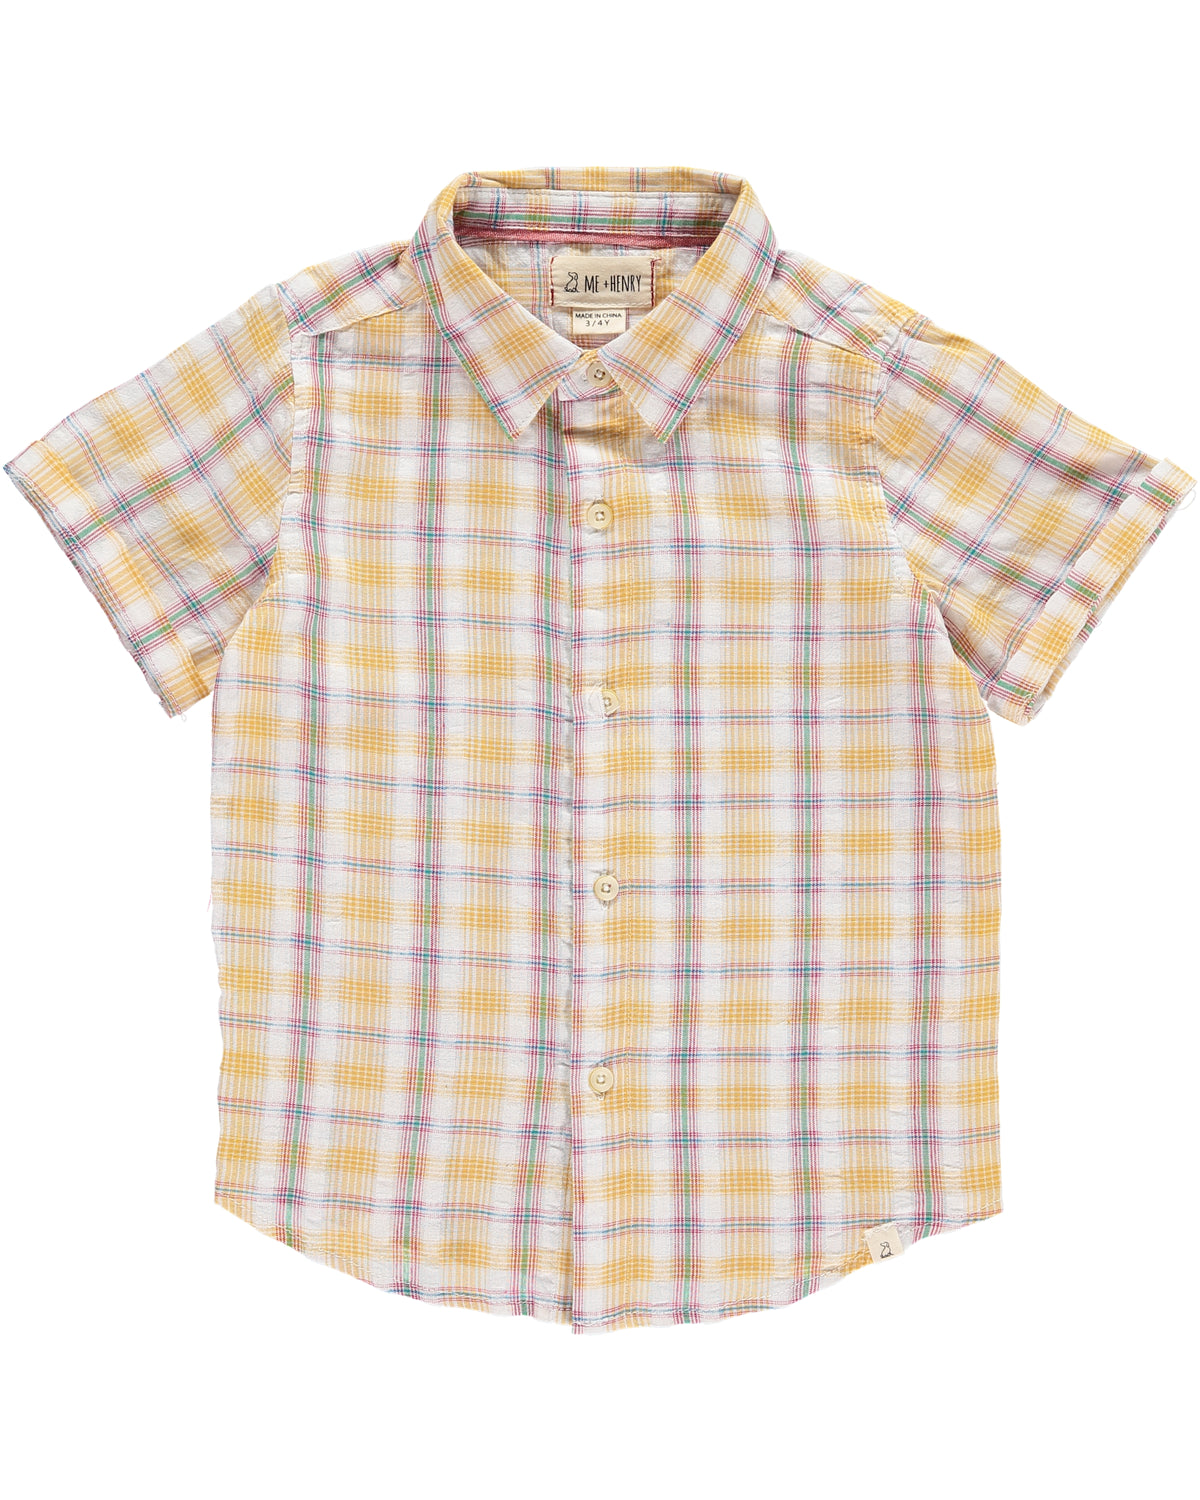 Boys Yellow Plaid Cotton Woven Shirt